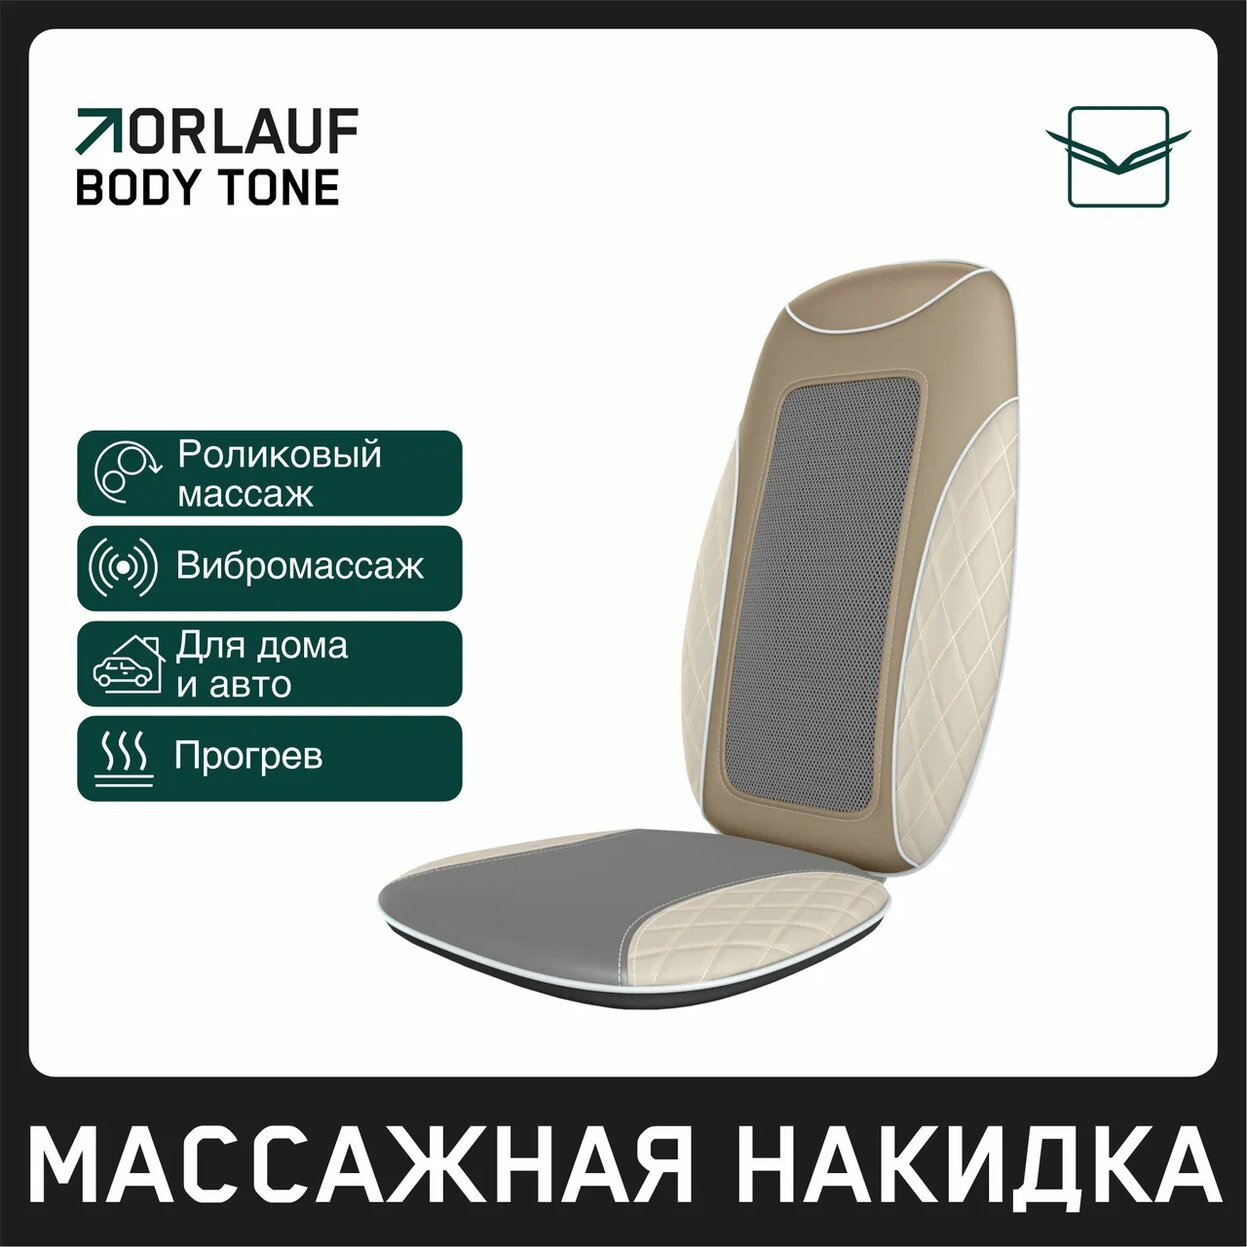 Orlauf Body Tone из каталога устройств для массажа в Москве по цене 15400 ₽